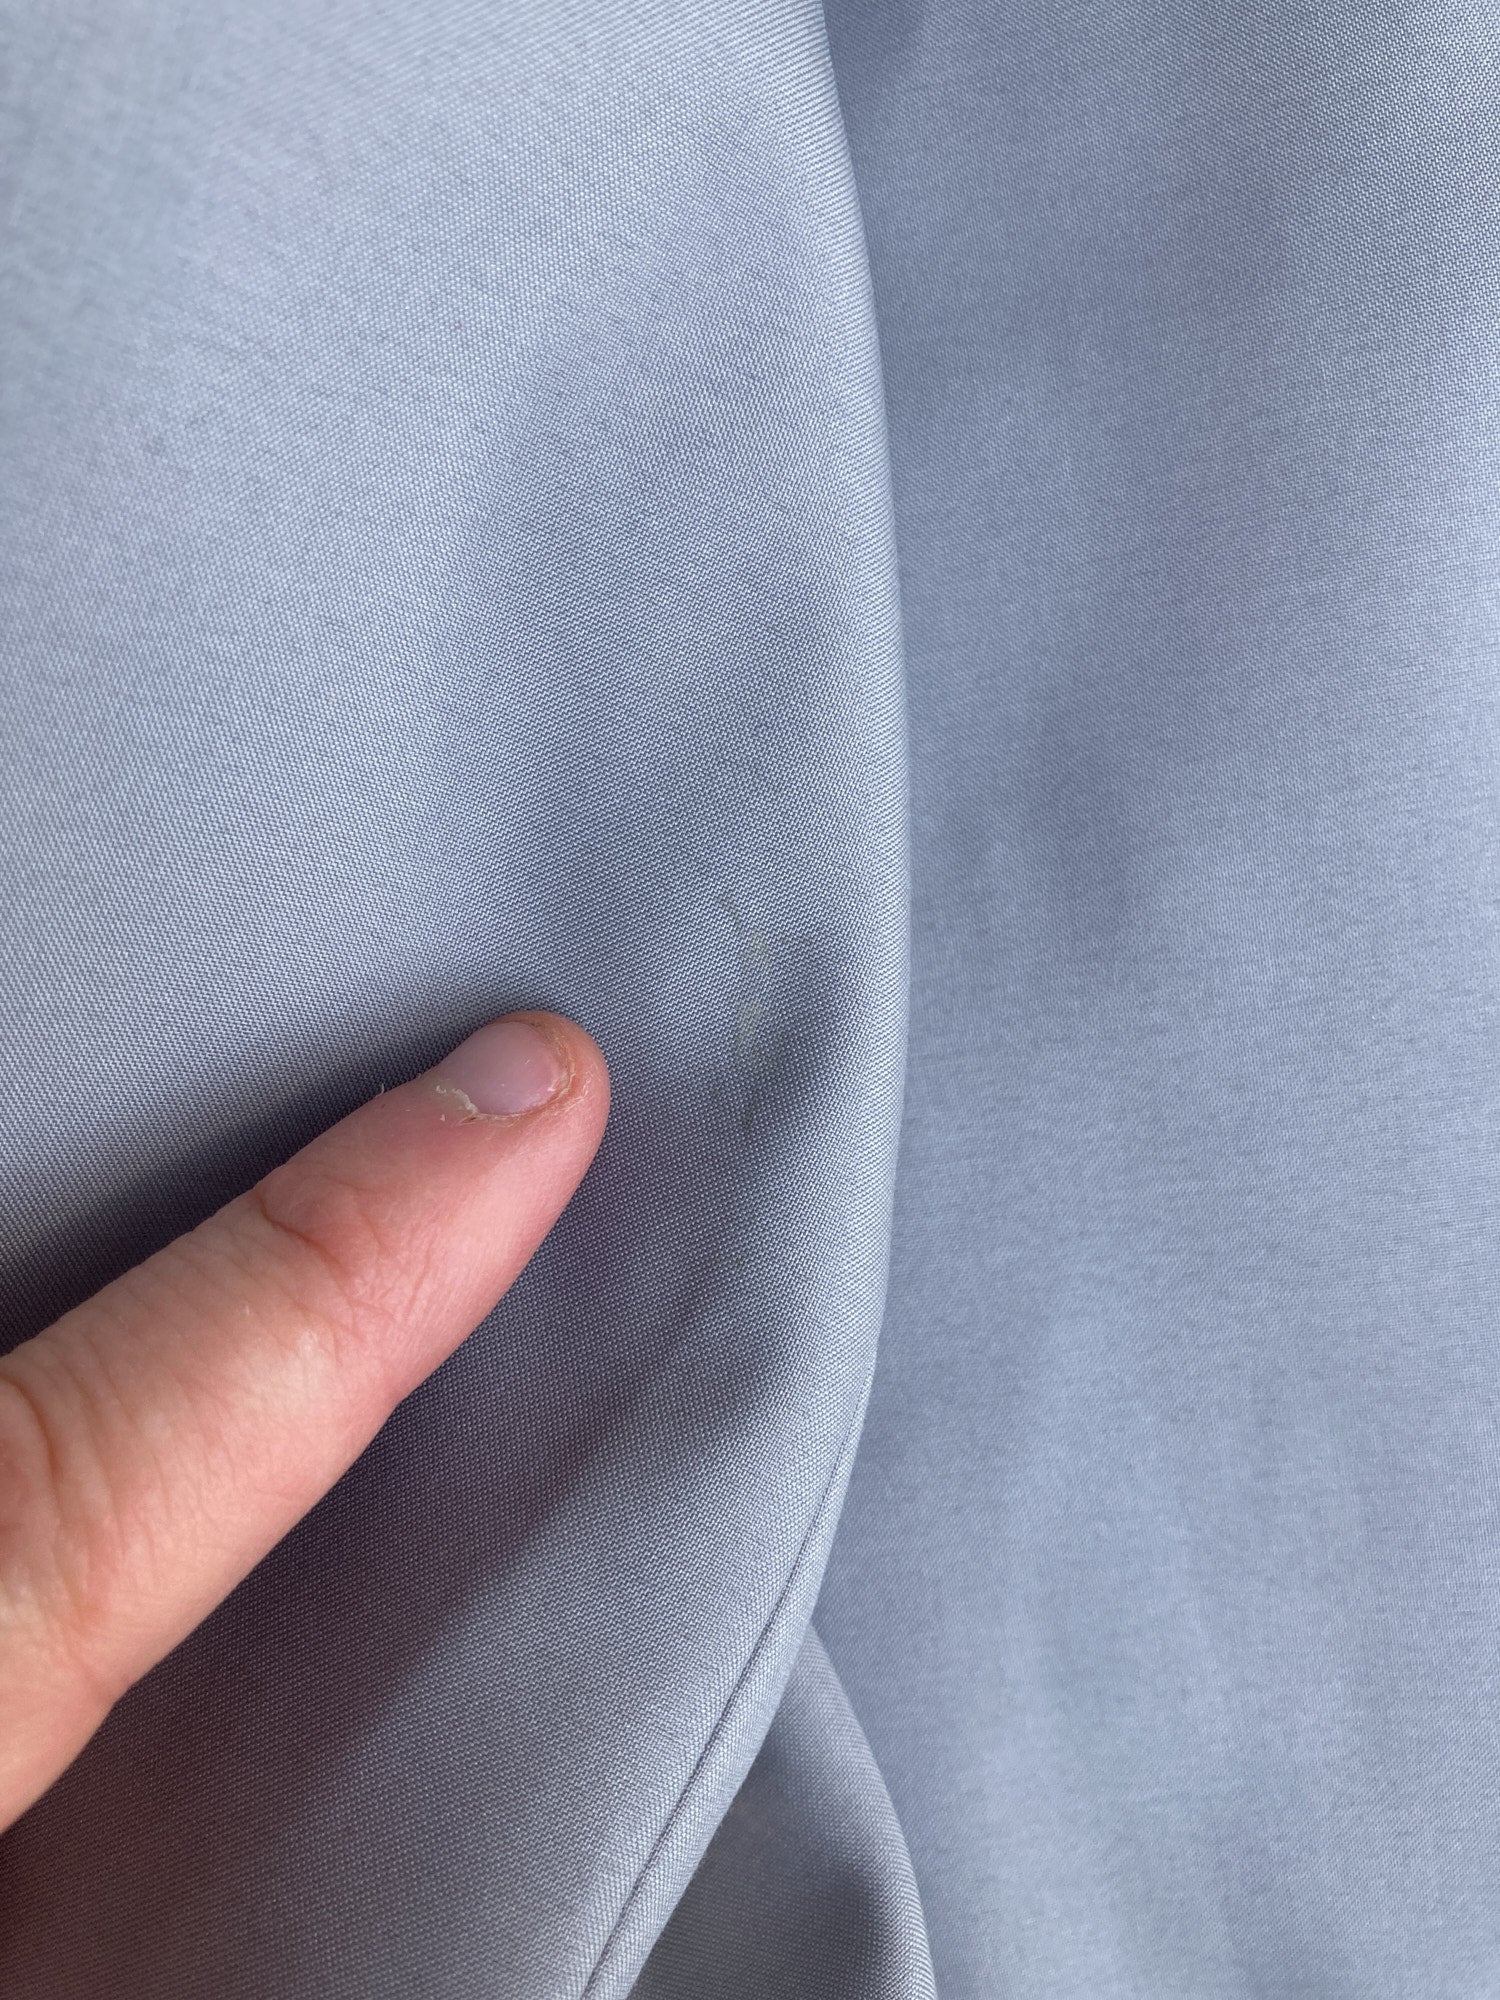 Samsonite 1990s grey poly blend zip jacket - size 50 M L